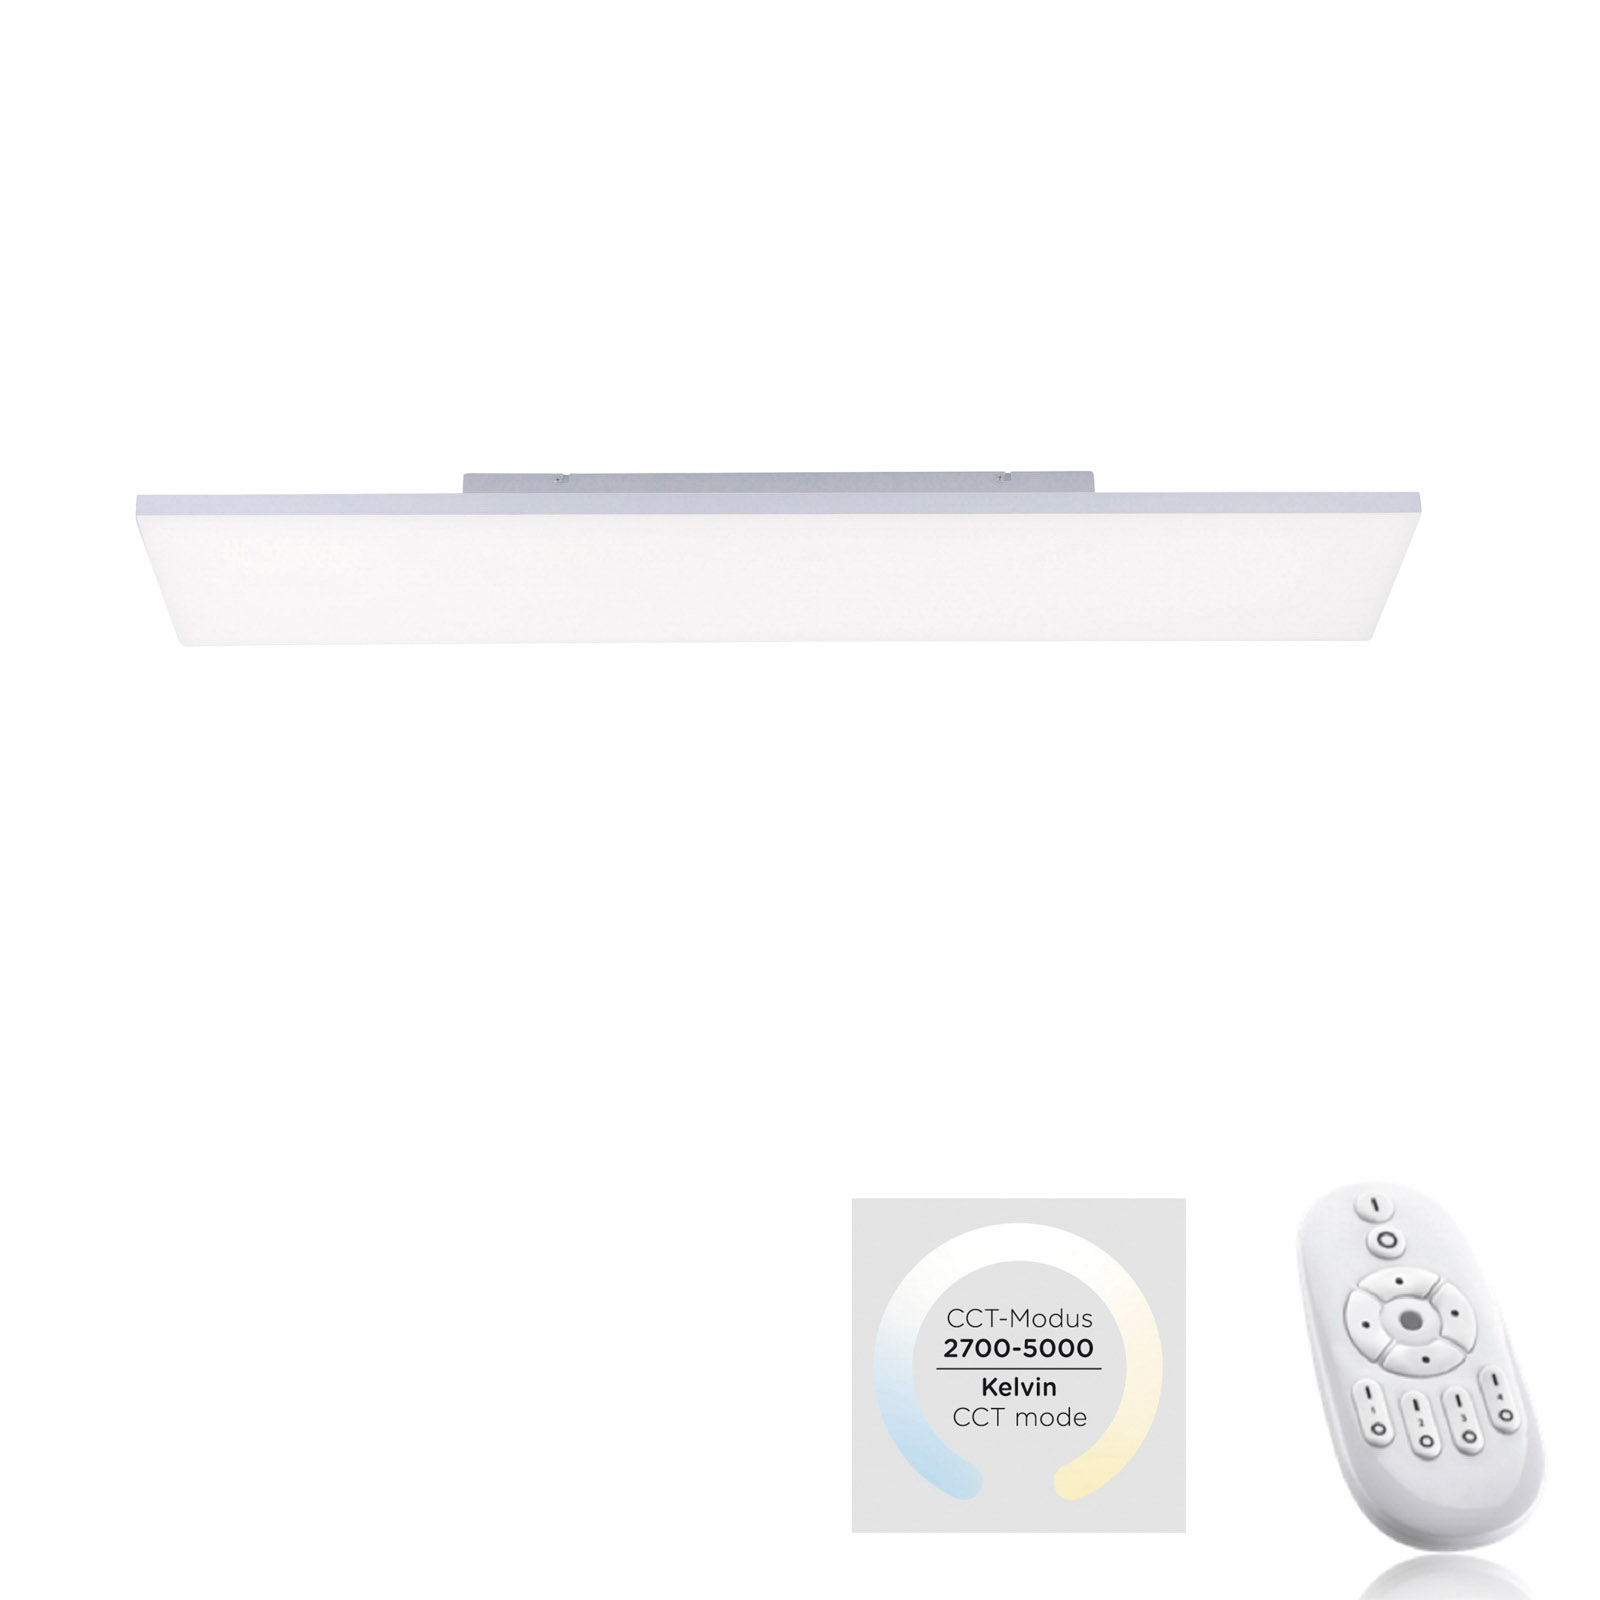 Plafonnier LED Canvas, tunable white, 100 x 25 cm